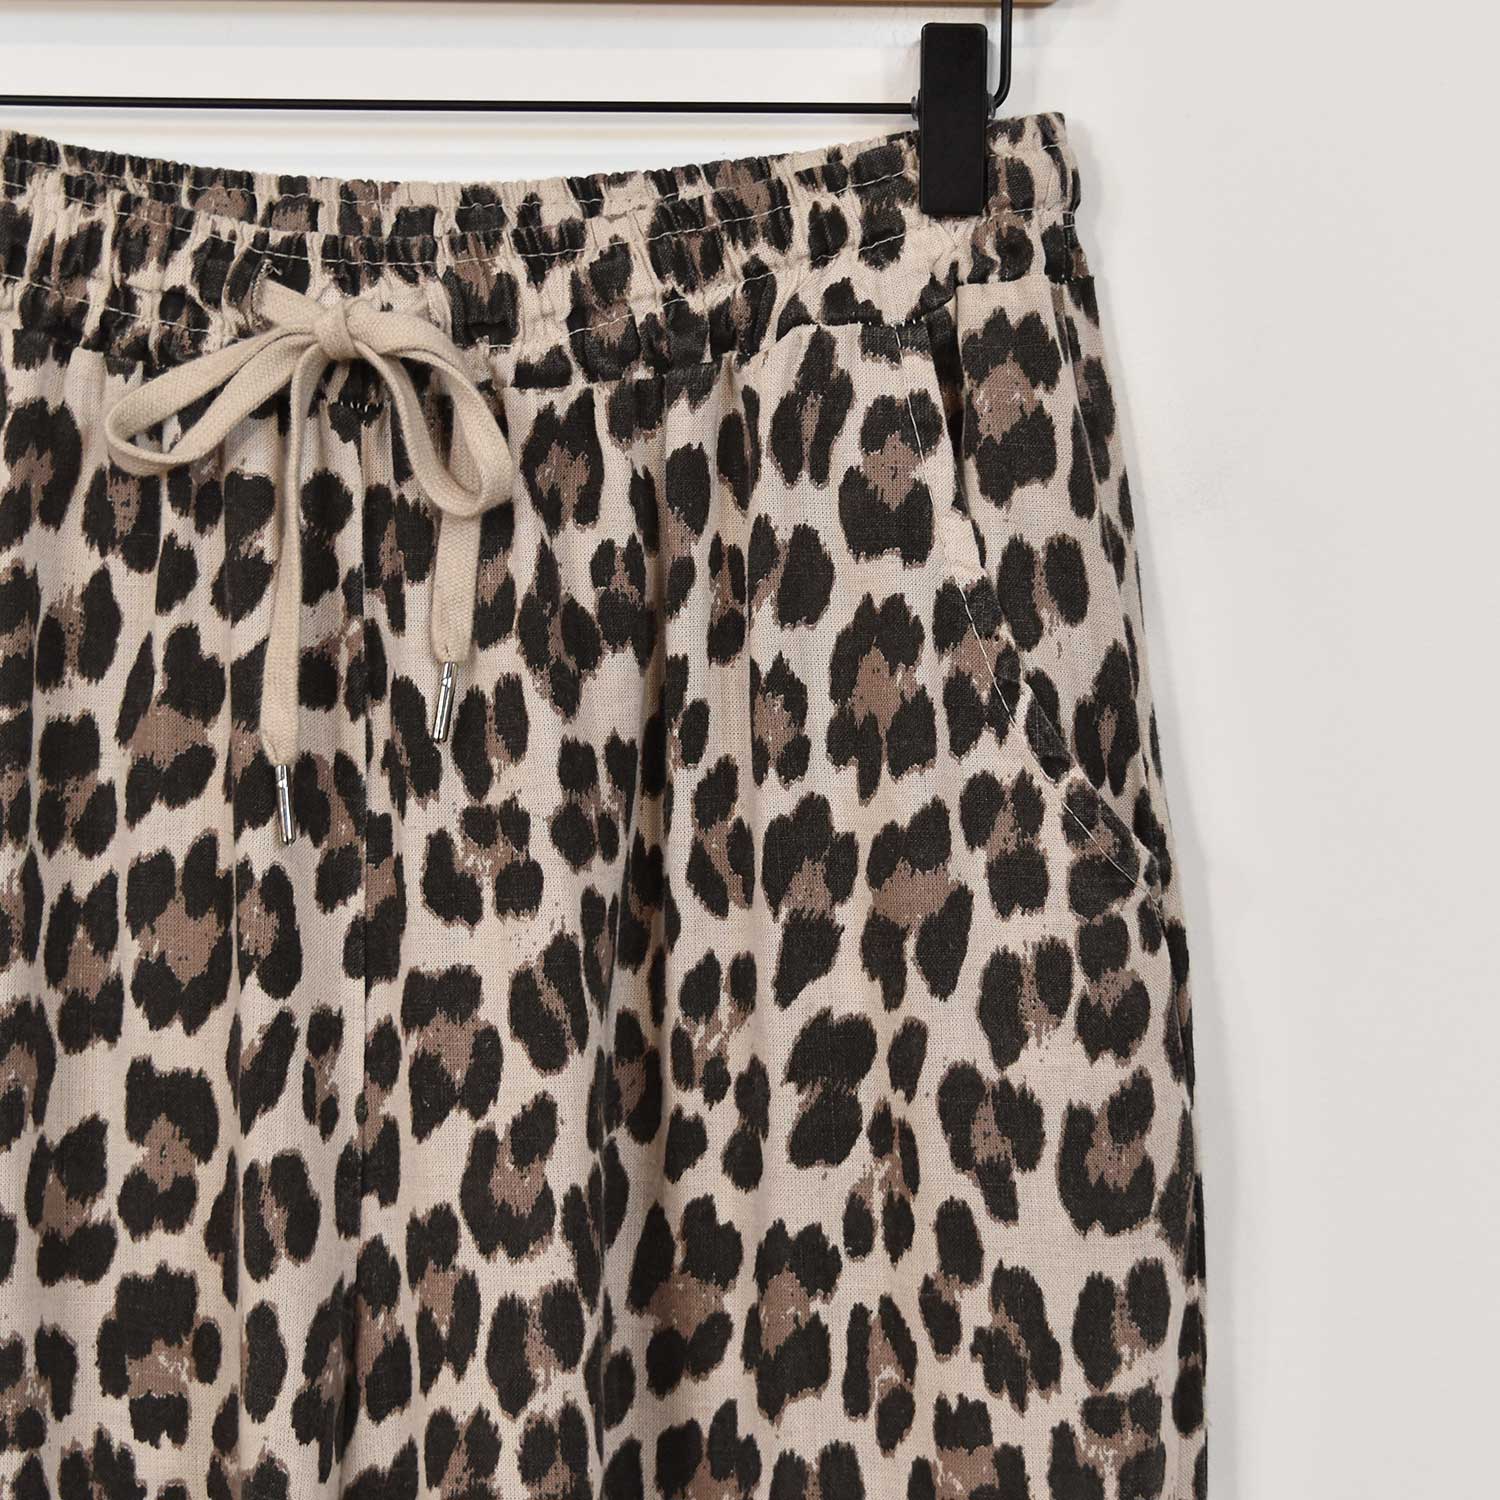 Pantalón lino leopardo